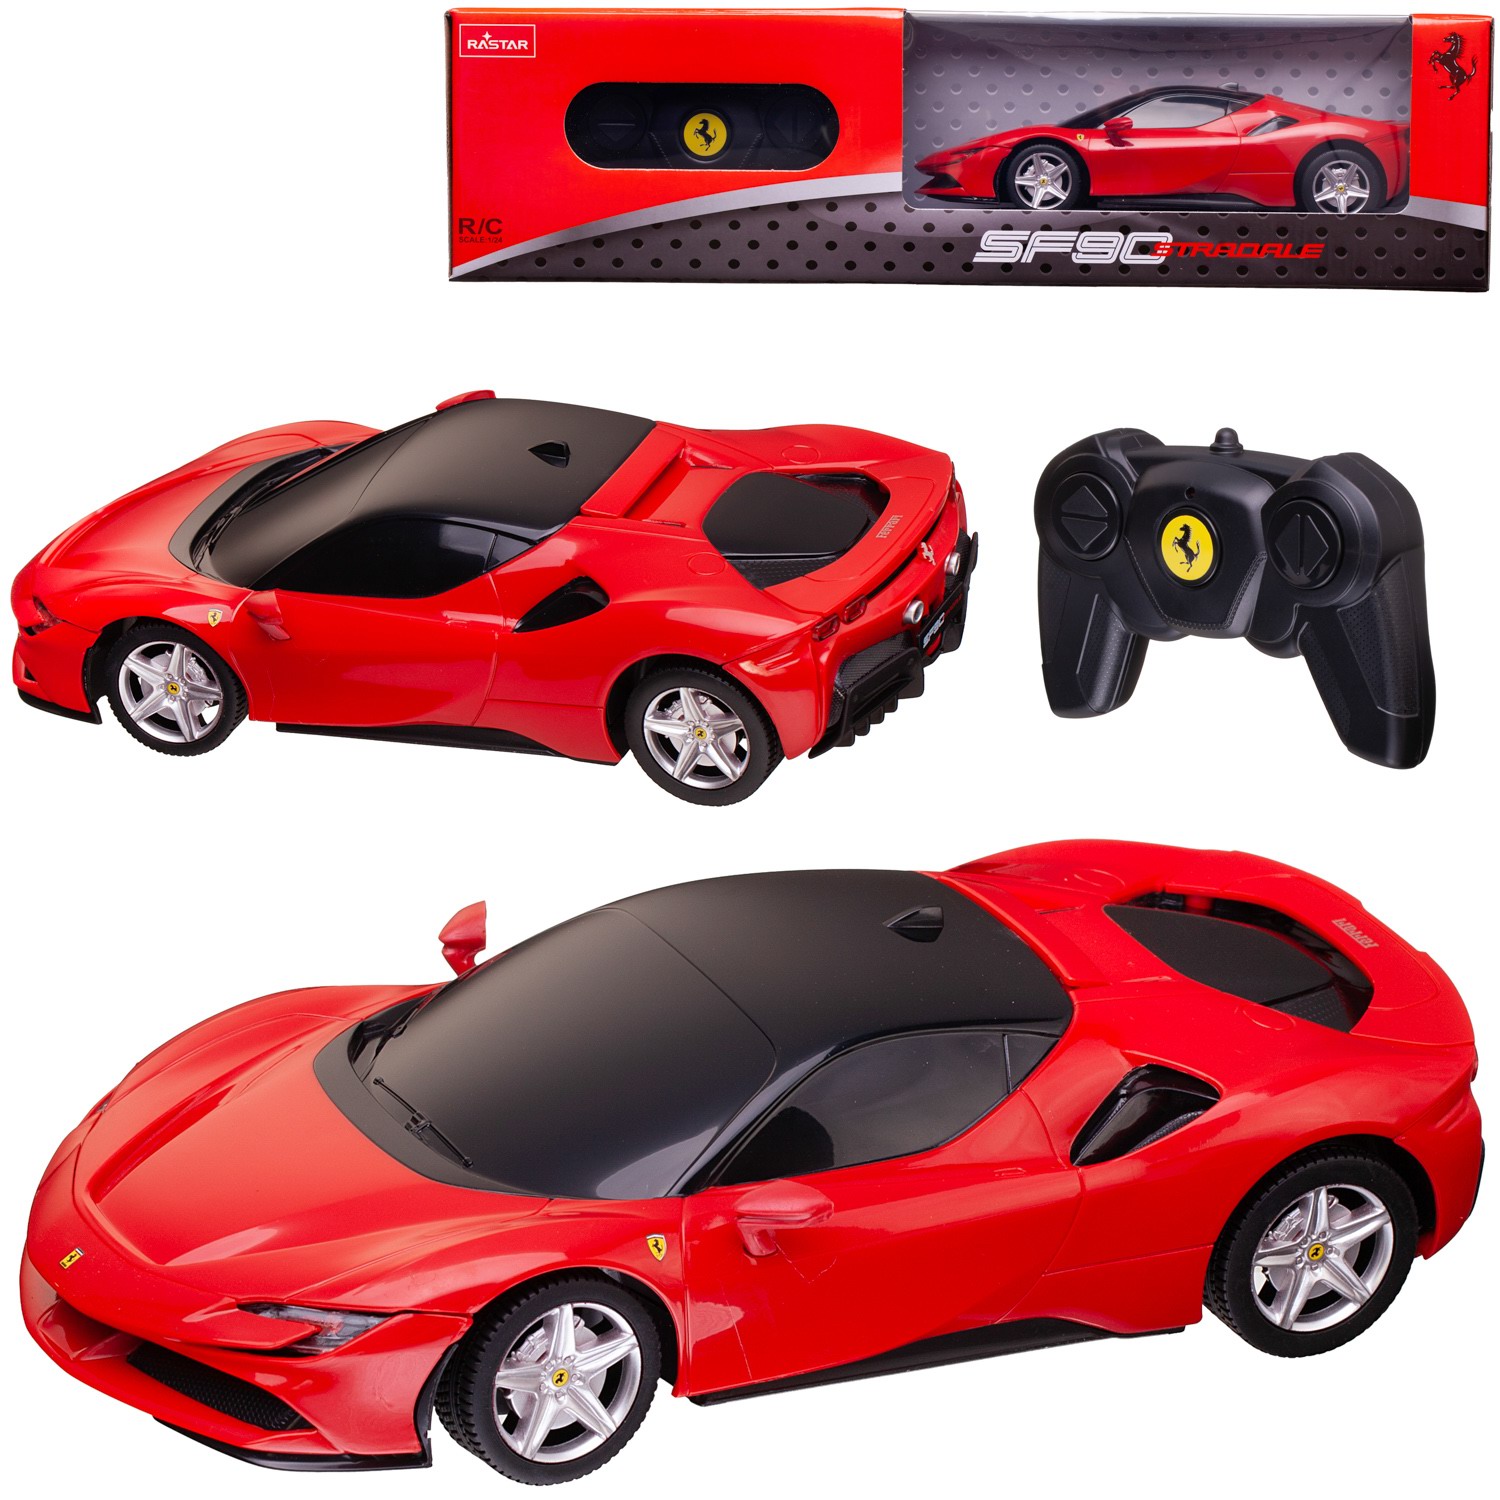 Машина р/у 1:24 Ferrari SF90 Stradale 2,4G, цвет красный, 19.5*9.6*5.3 takara tomy tomica scale 1 62 ferrari sf90 stradale 120 alloy diecast metal car model vehicle toys gifts collections